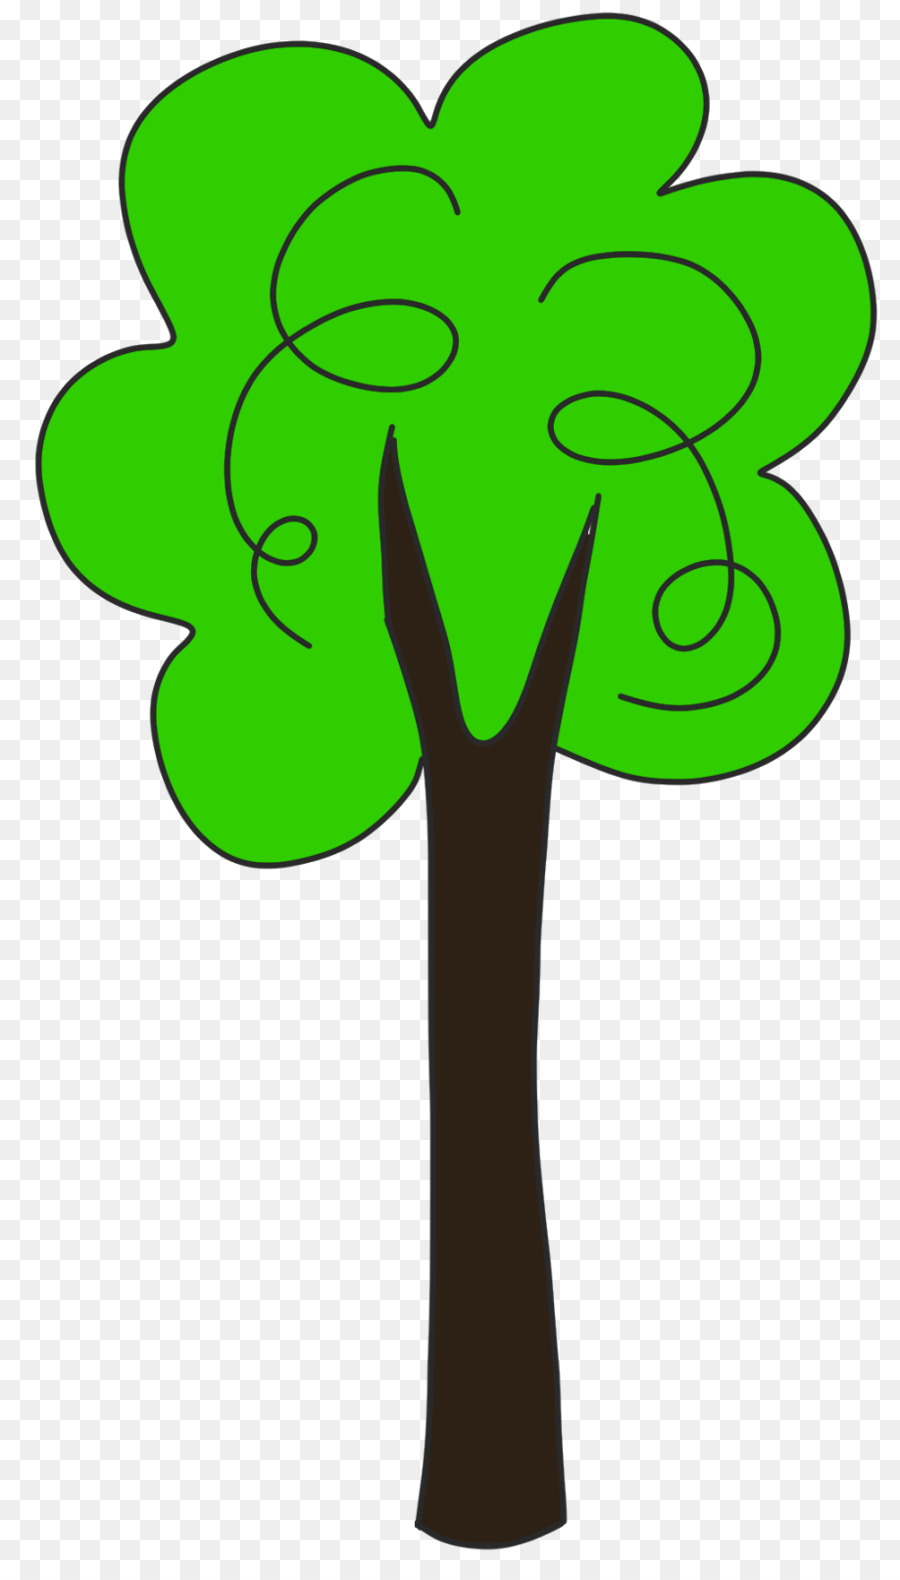 Tree Free Clip art - alto clipart